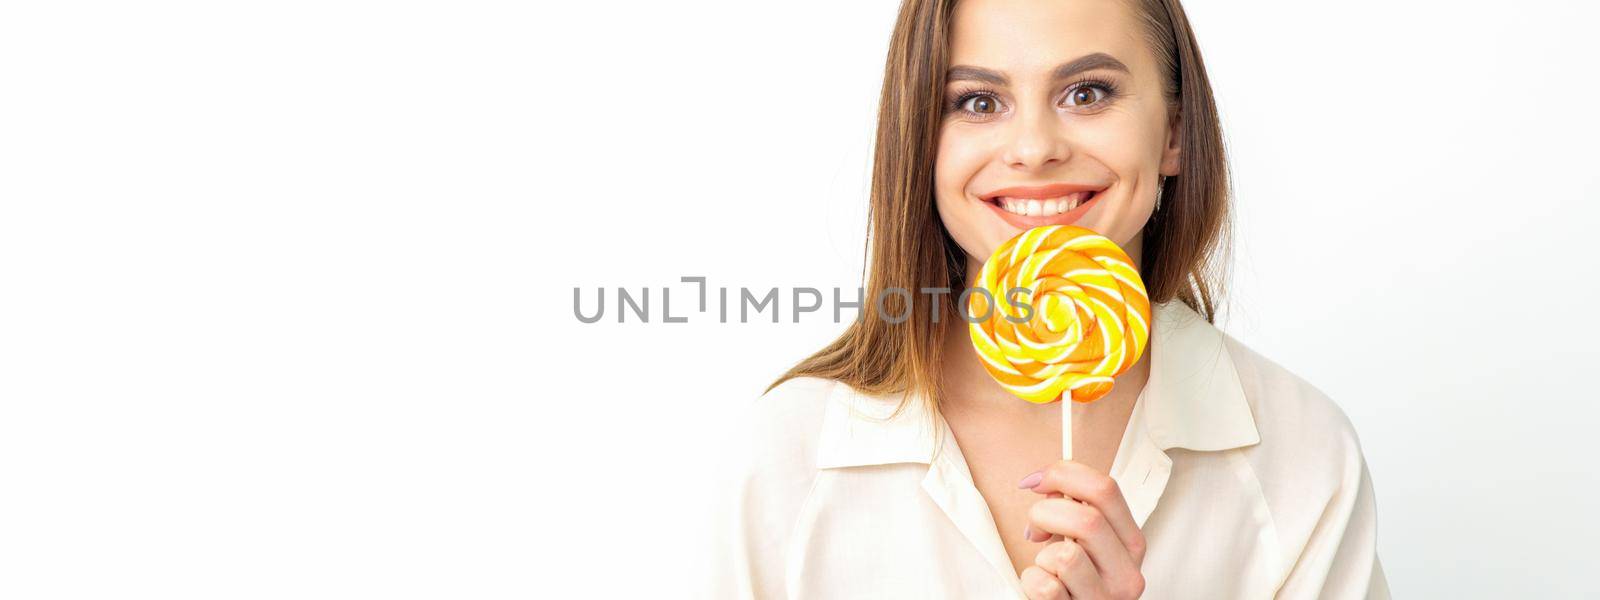 Beautiful young caucasian woman wearing a white shirt licking a lollipop on a white background. by okskukuruza